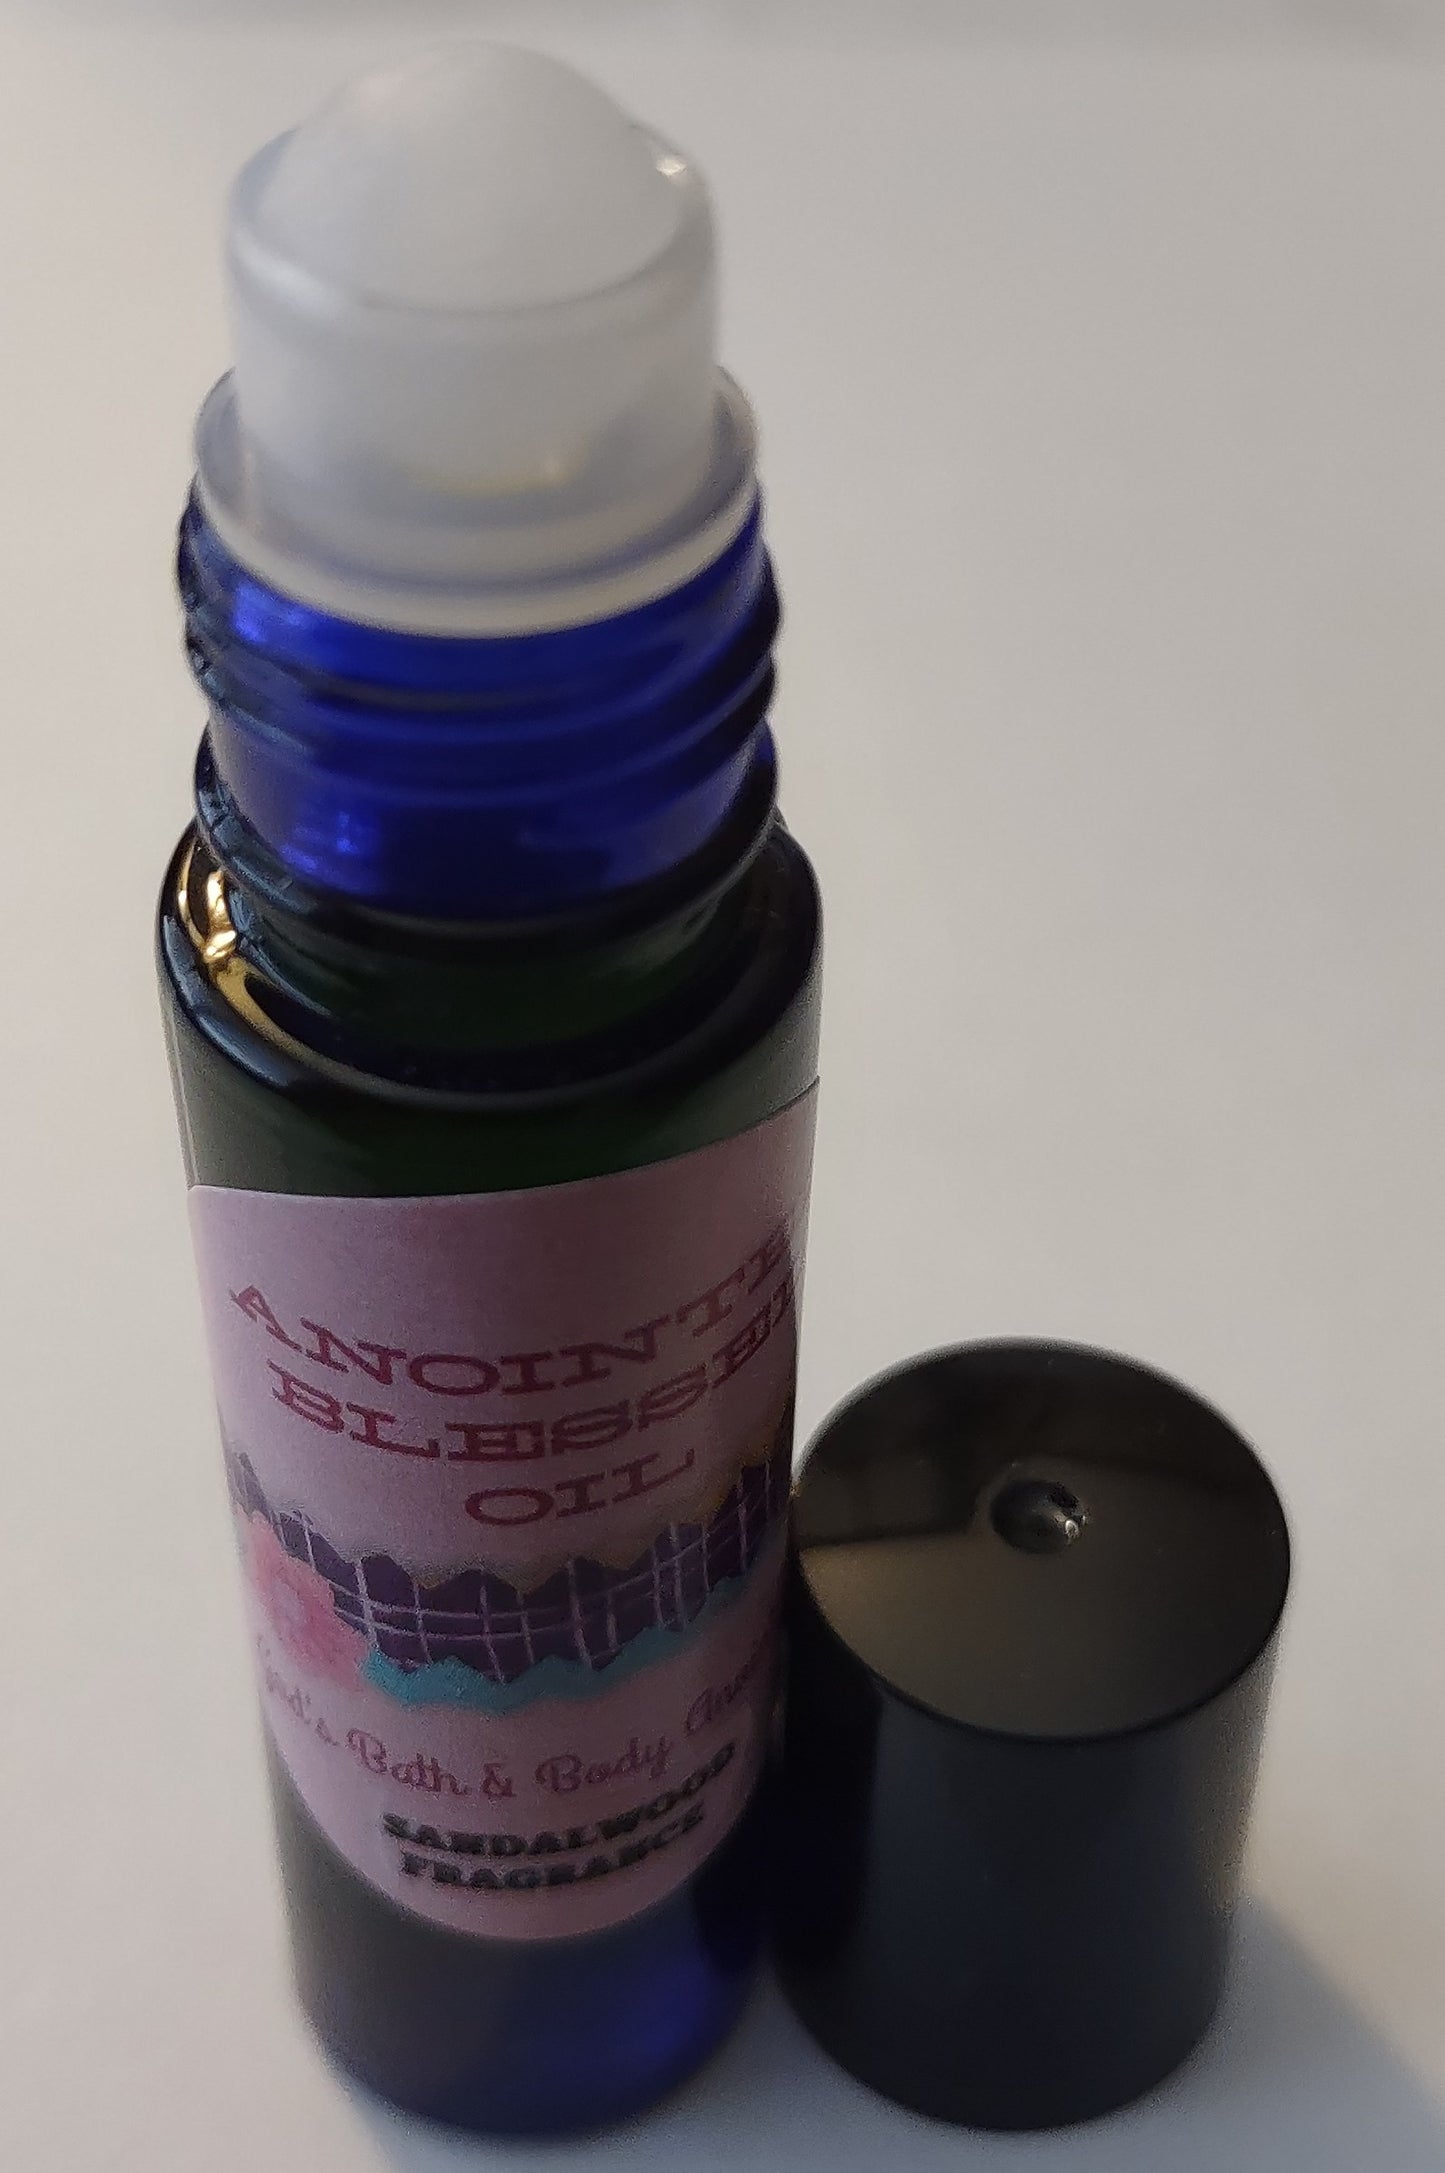 Sandalwood Anointed Blessed Oil 1/3oz roll-on bottle